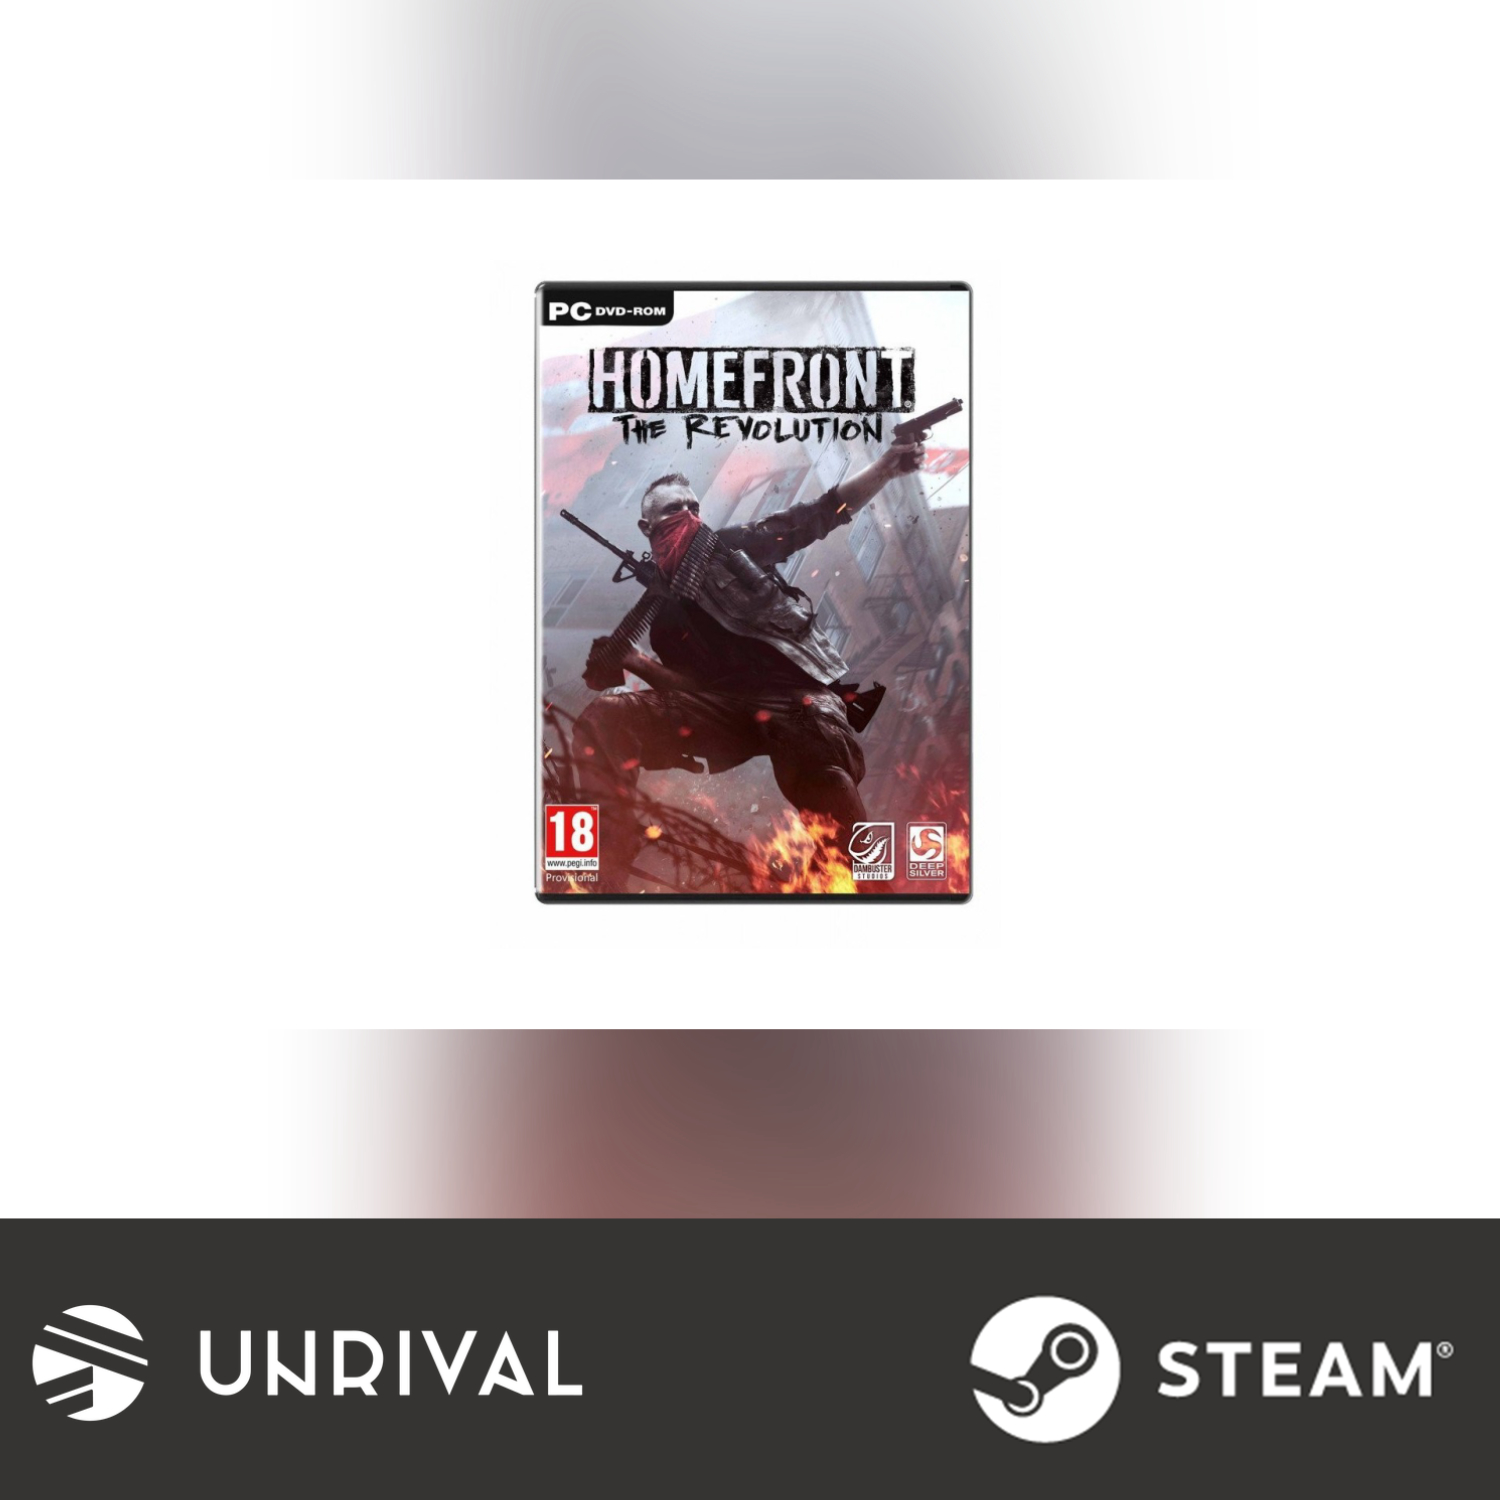 Homefront: The Revolution PC Digital Download Game (Multiplayer) - Unrival